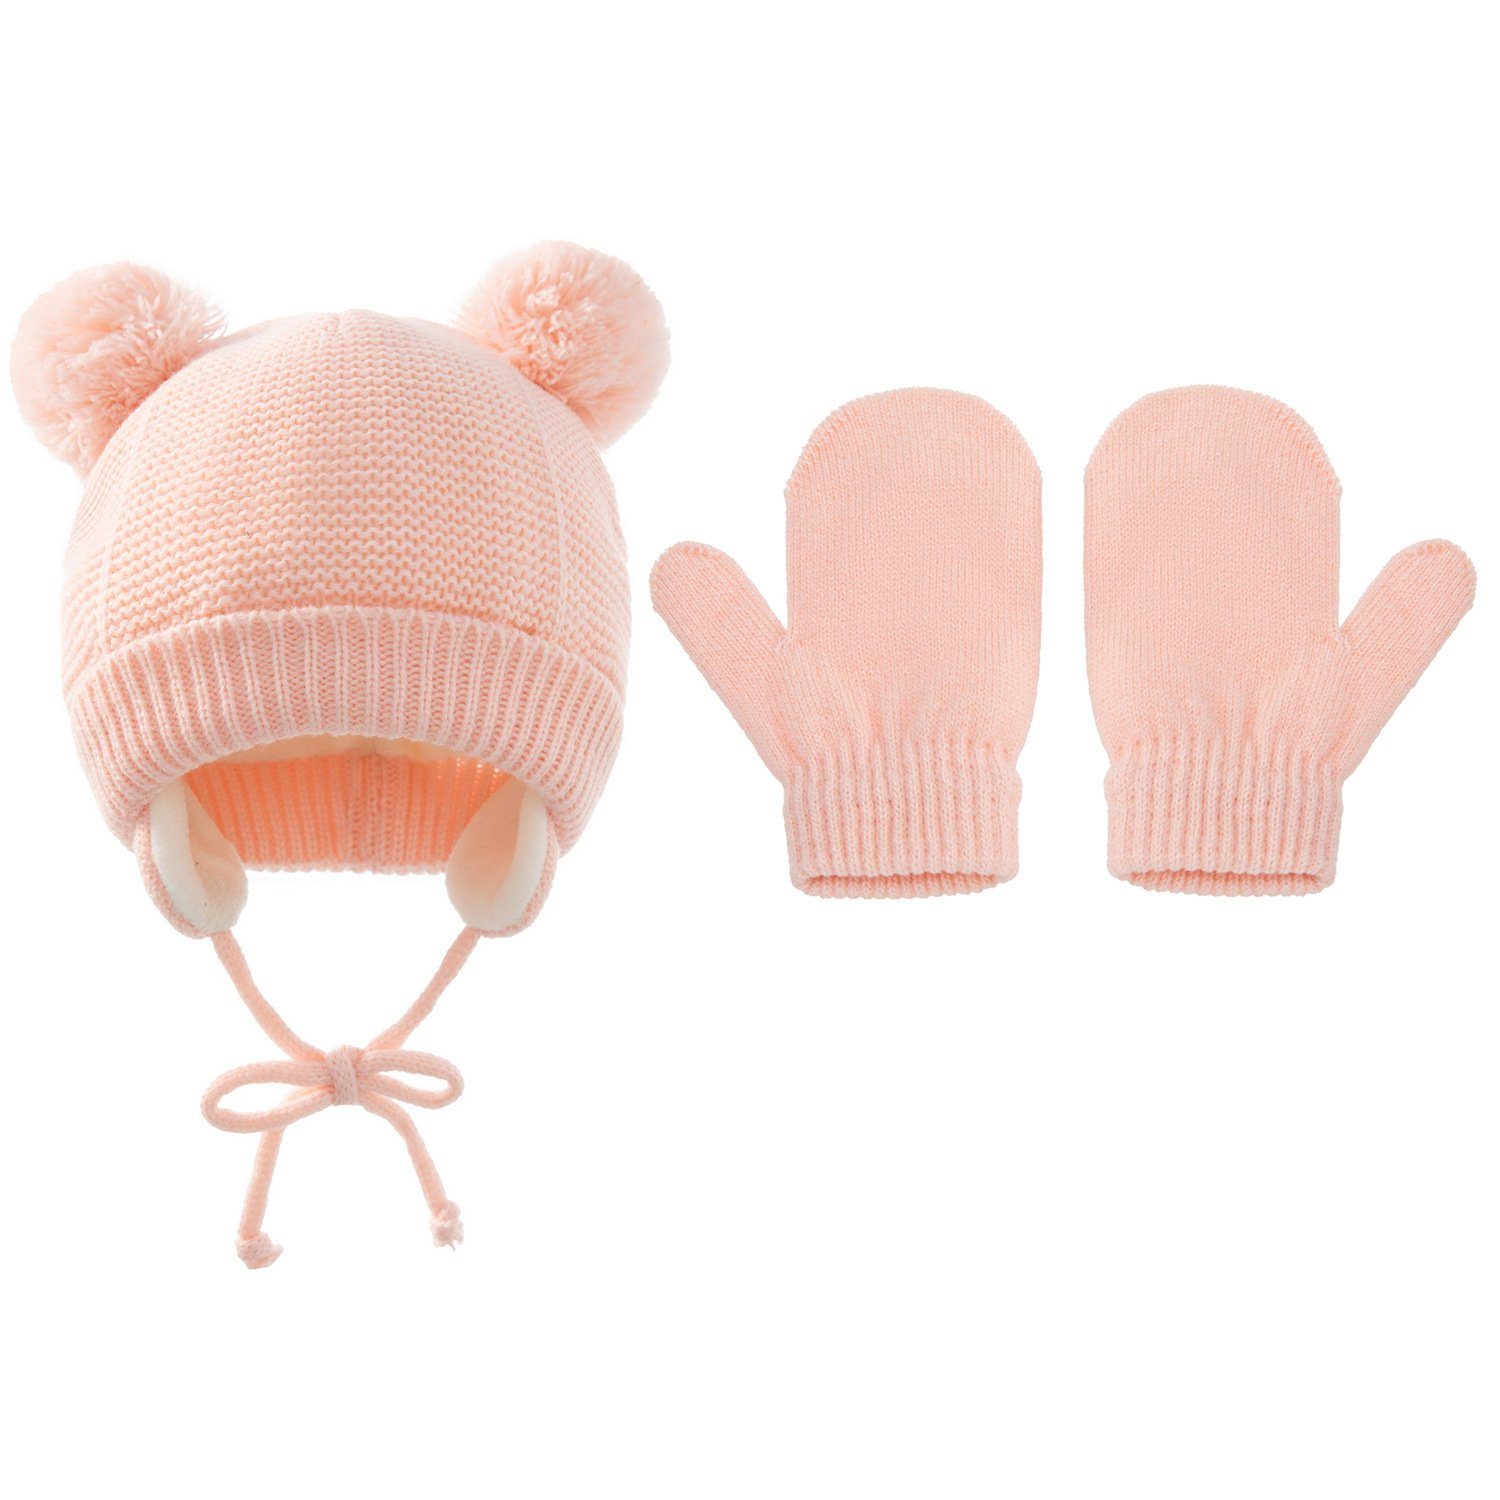 XDeer Filzhut 2 Stück Kinder Mütze Handschuhe warme Strickmütze pink baby Wintermütze Set